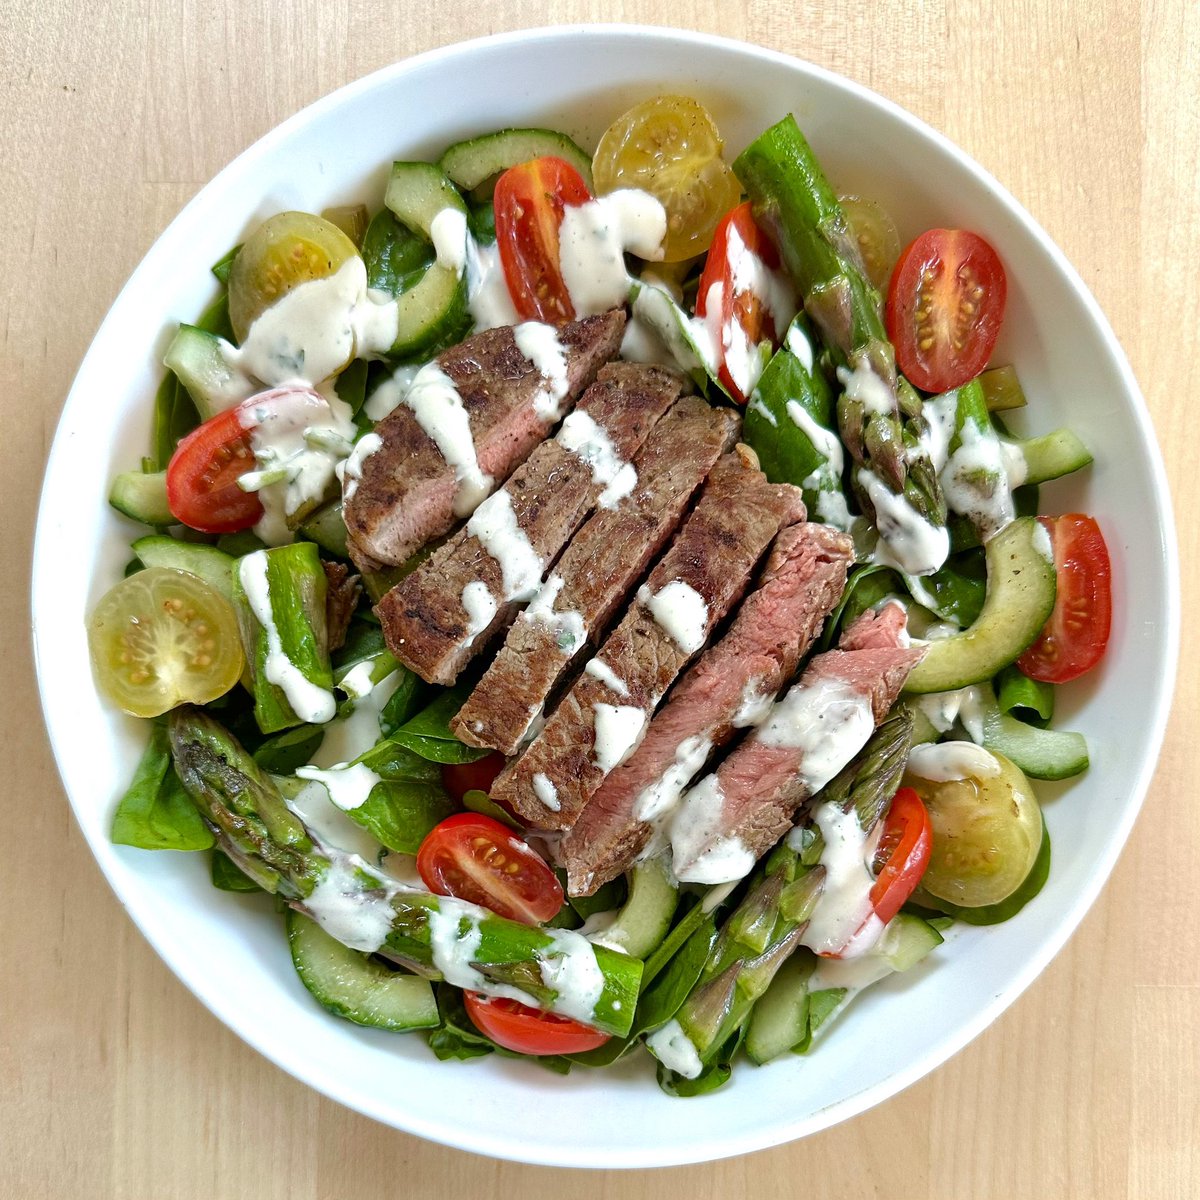 This is my steak salad with homemade Caesar dressing. ☀️ #yummo #myyummofoodblog #saladrecipe #saladbowl #homemade #glasgow #glasgowfood #eatwell #healthyfood #tomato #sunnyday #foodpics #steaksalad #salad #lunchtime #foodie #beef #asparagus #caesarsalad #fresh #tuesdaymotivation